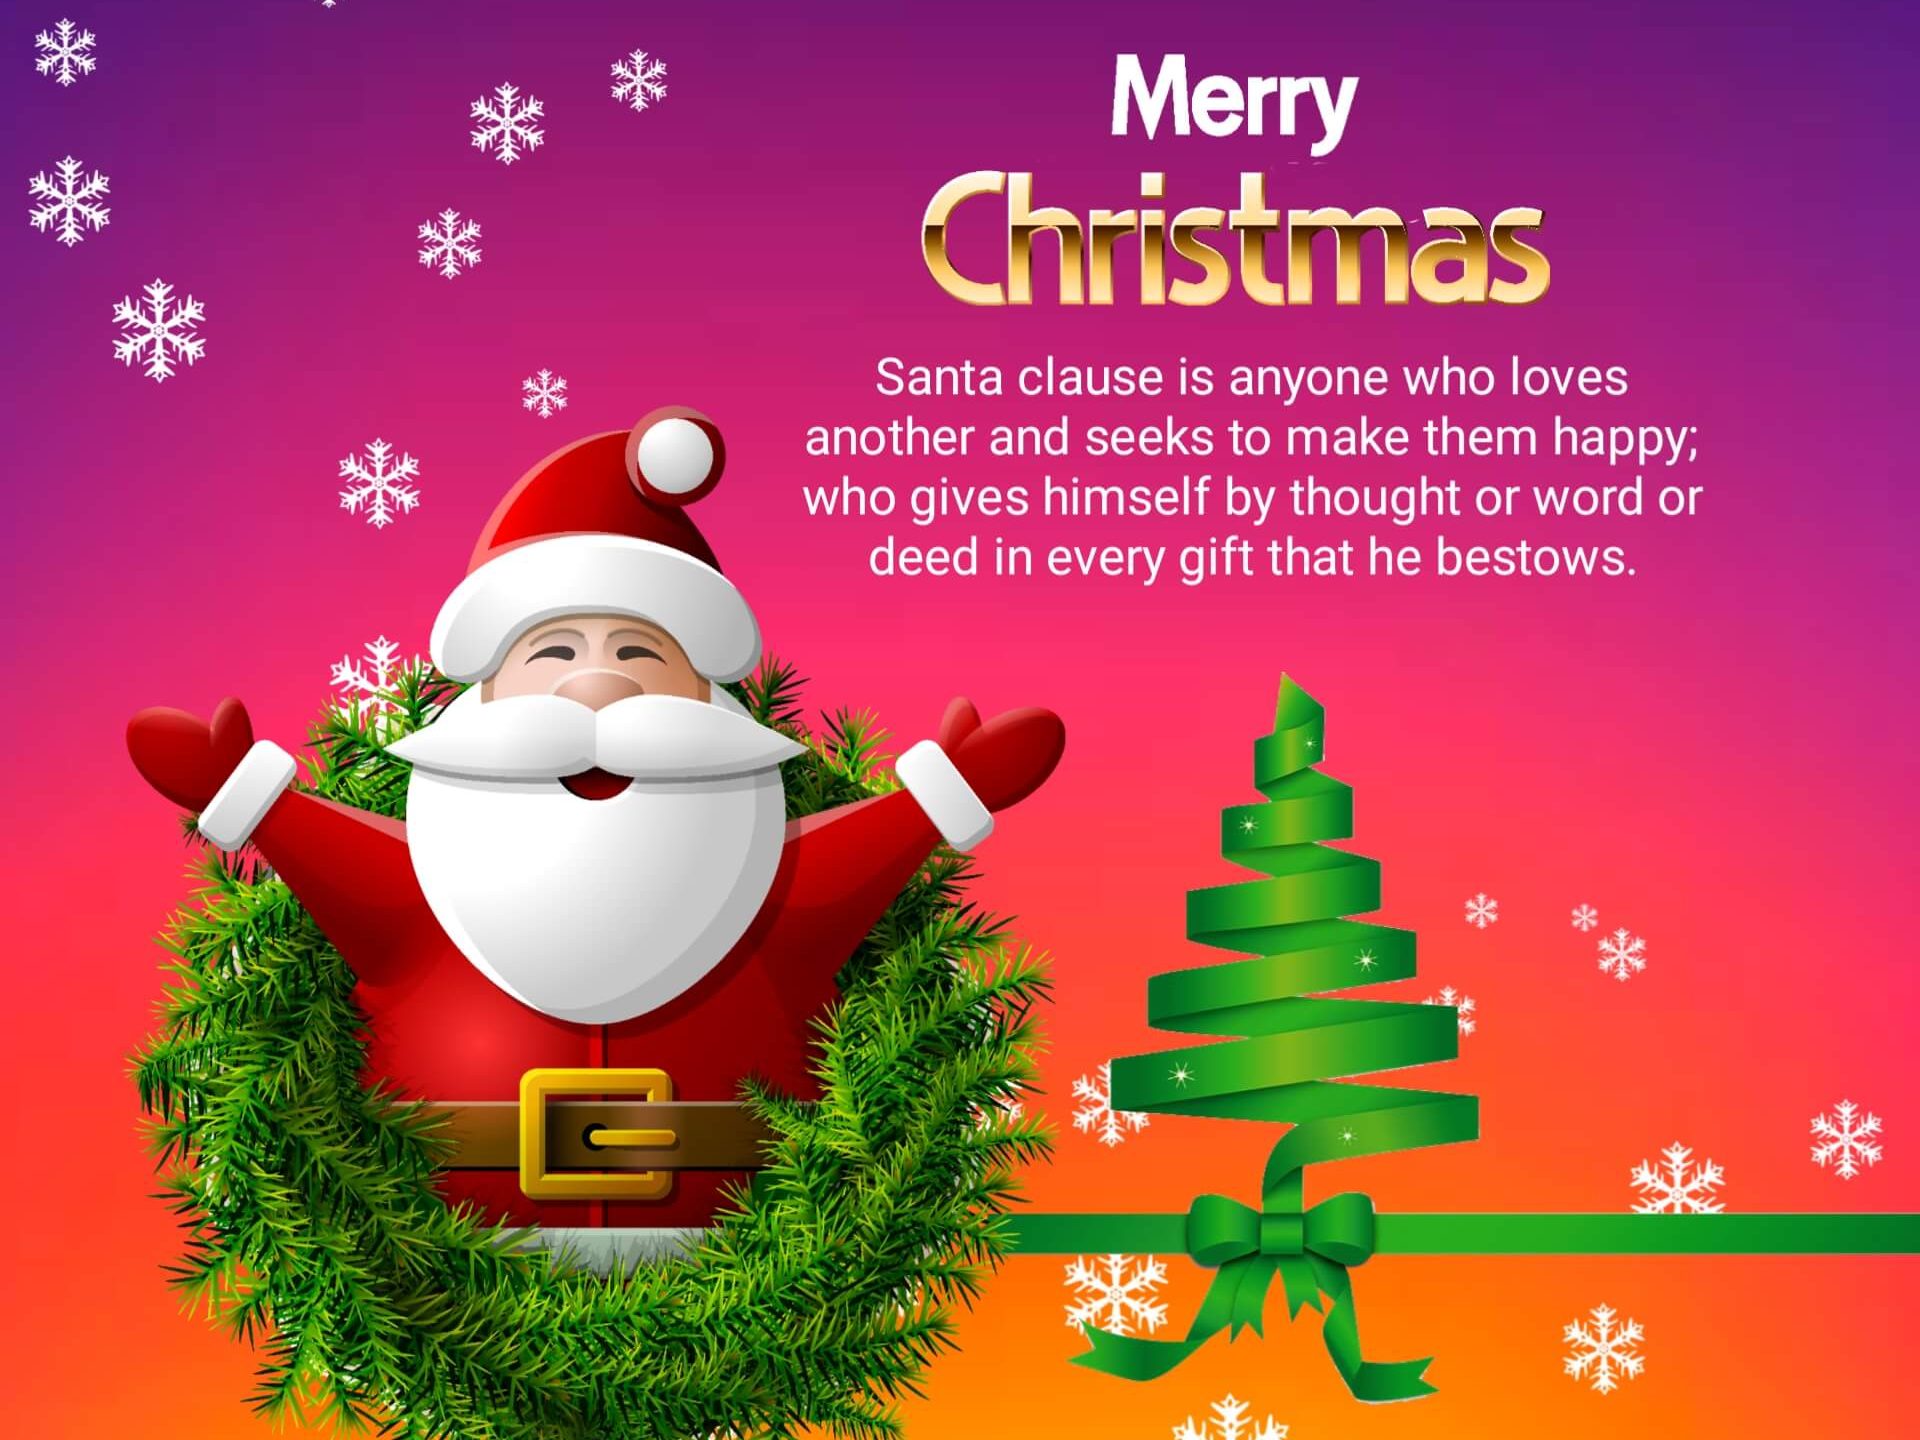 santa-clause-merry-christmas